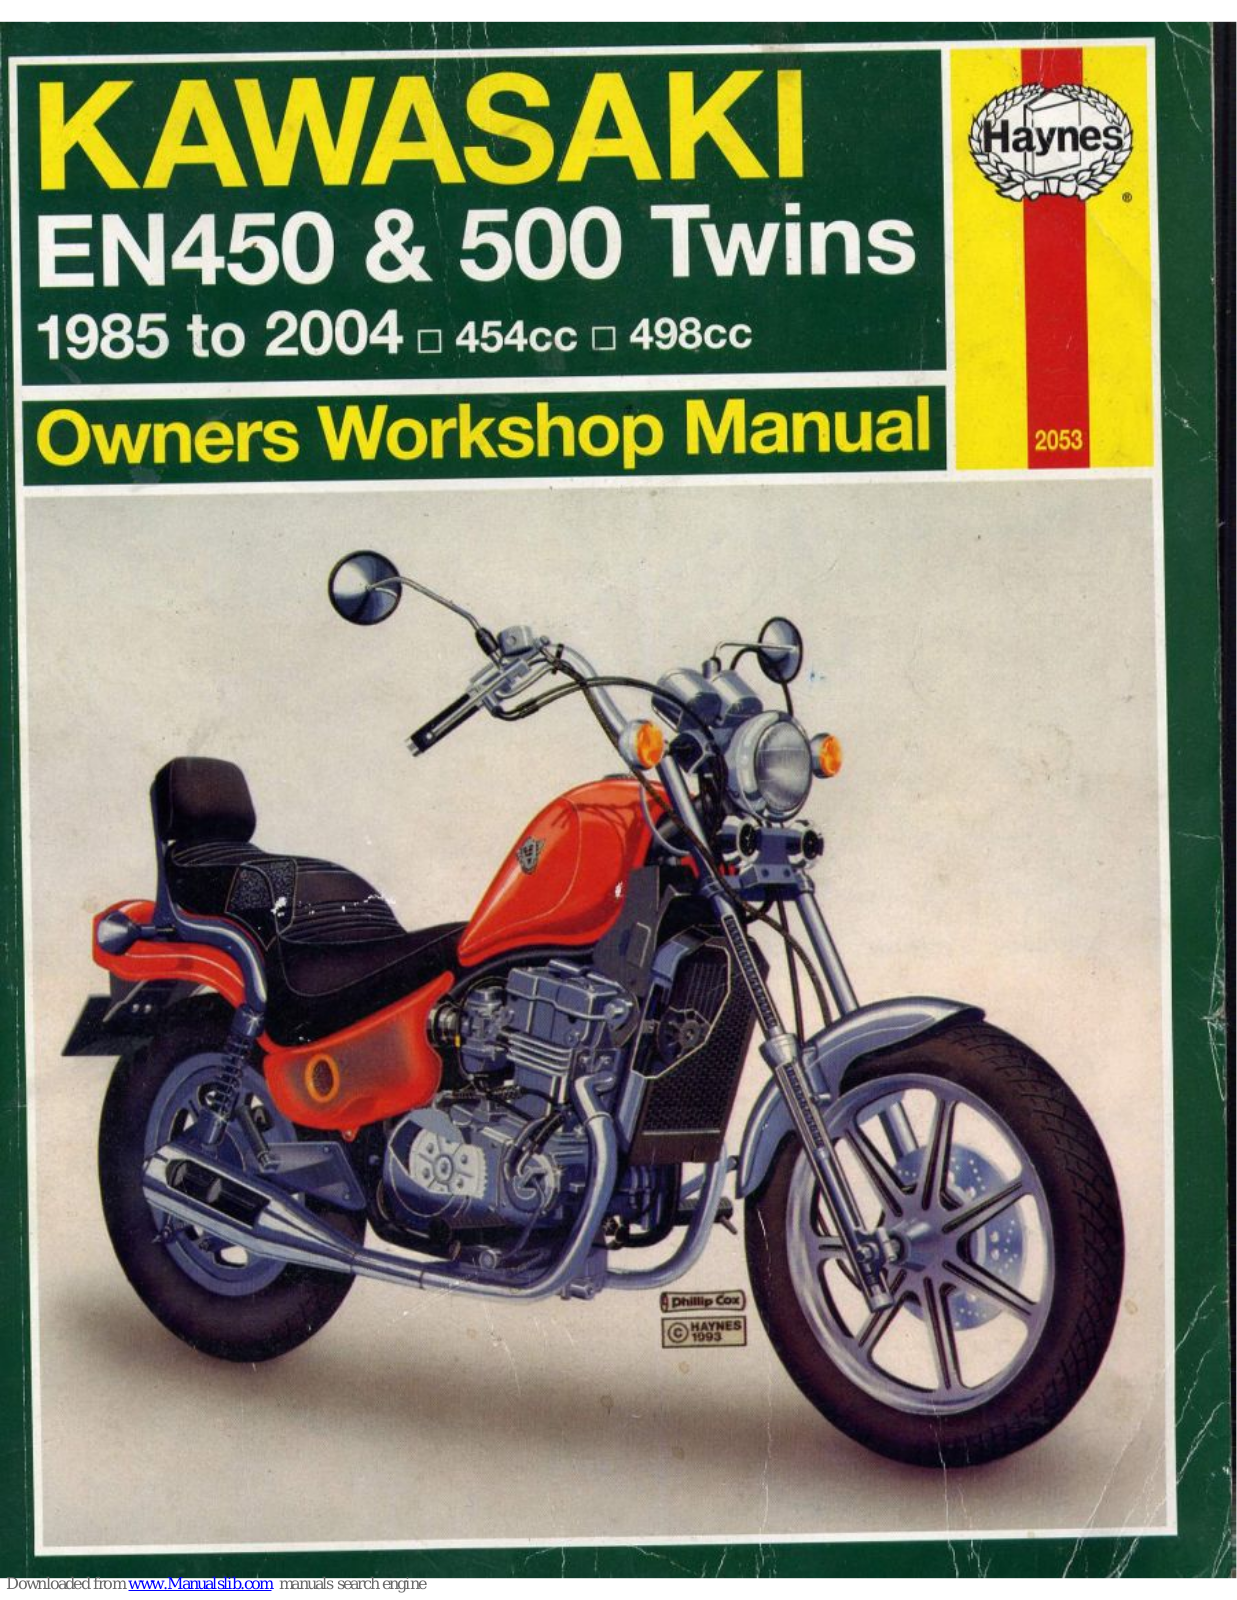 Kawasaki EN450 Twins, EN500 Twins Workshop Manual